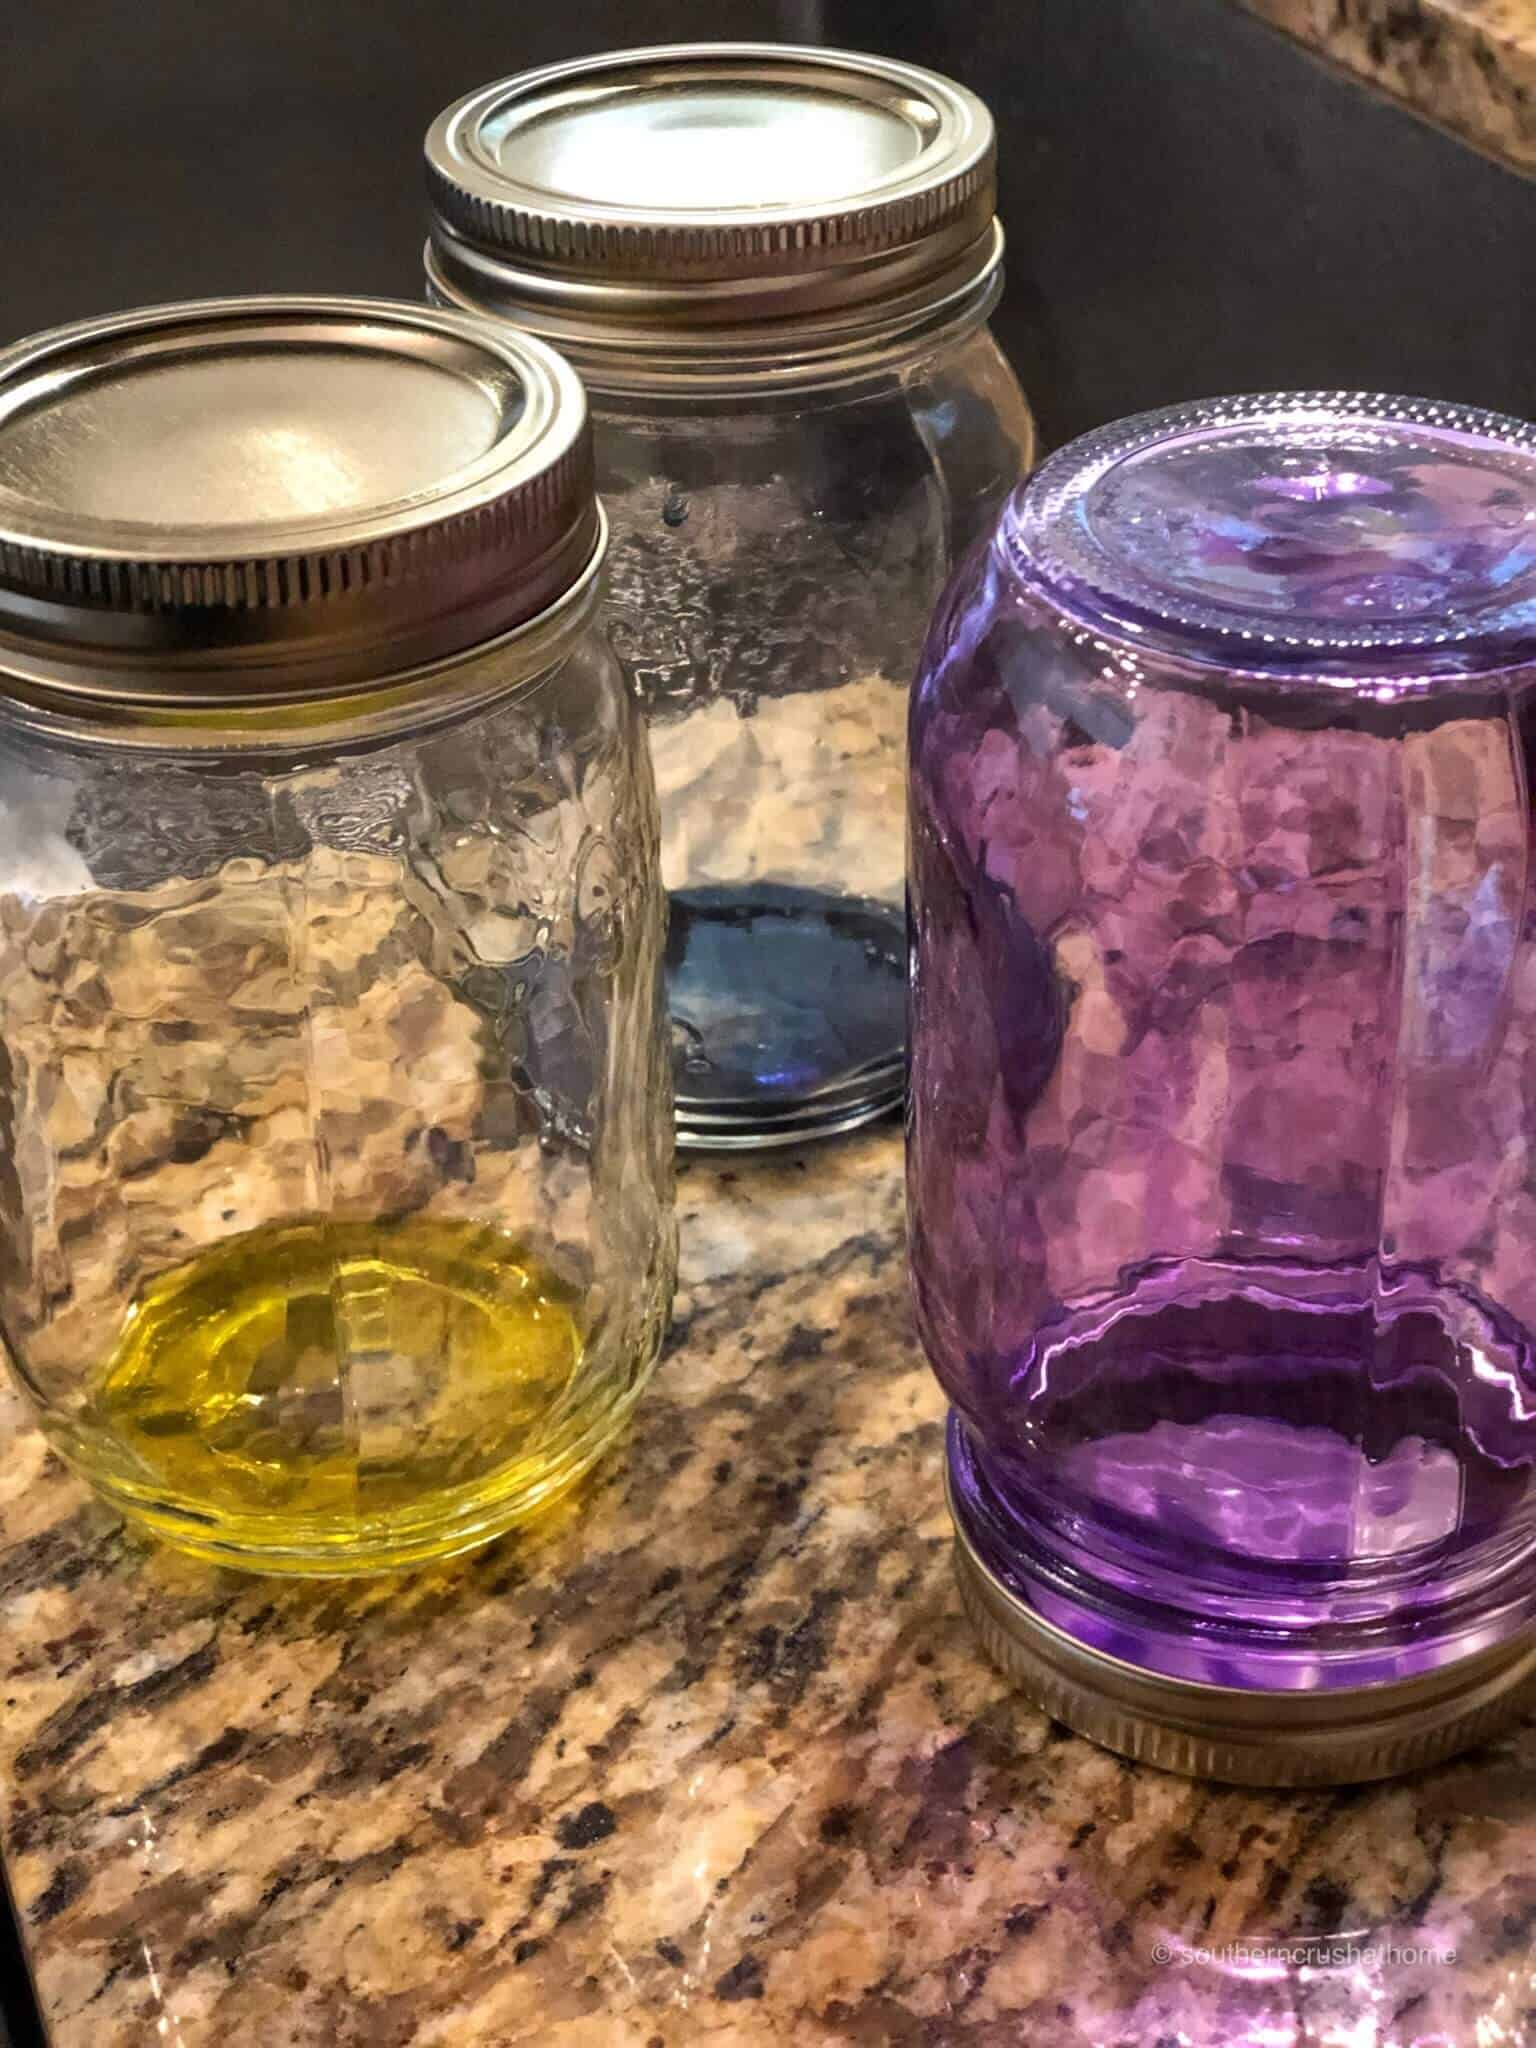 Decorative Glass Jar Small Small Shabby Style Mason Jar 